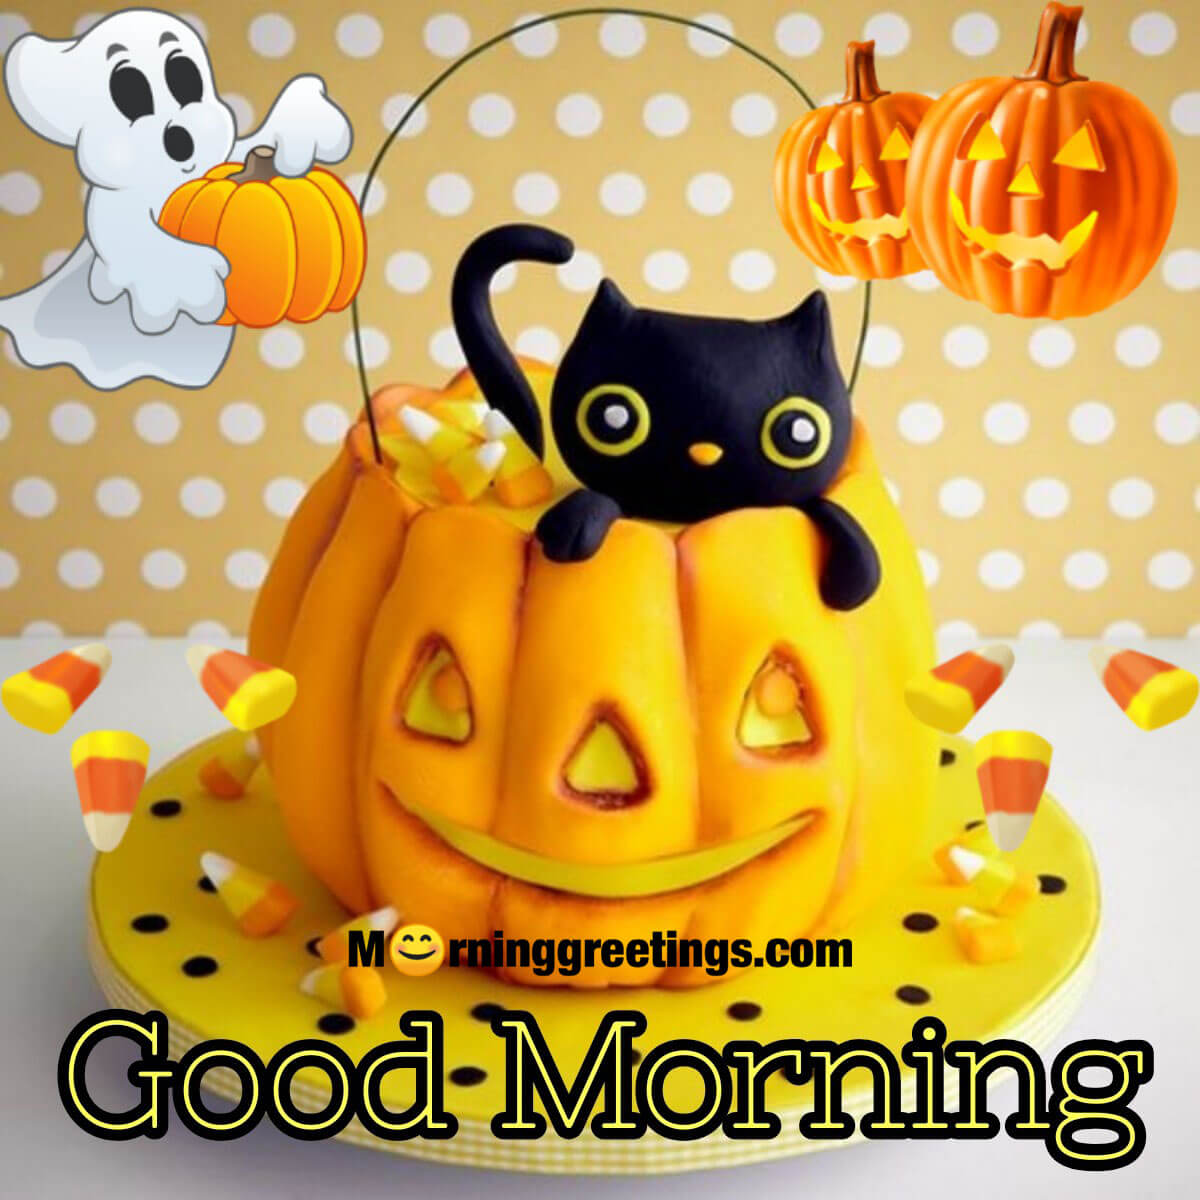 Good Morning Happy Halloween Card